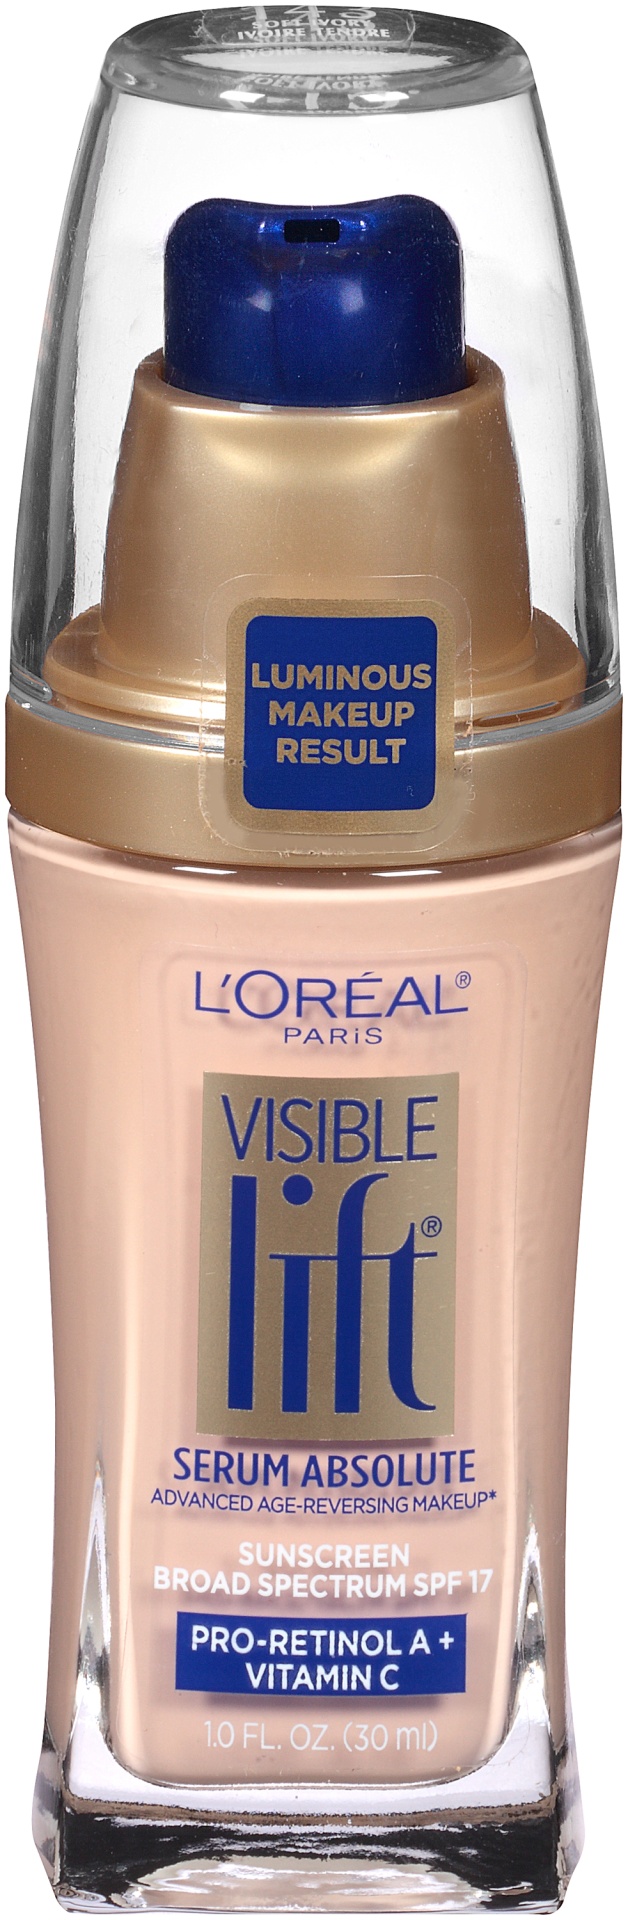 slide 3 of 7, L'Oreal Paris Visible Lift Serum Absolute Age-Reversing Lightweight Foundation Makeup with SPF 17 - 148 Natural Buff - 1 fl oz, 1 fl oz